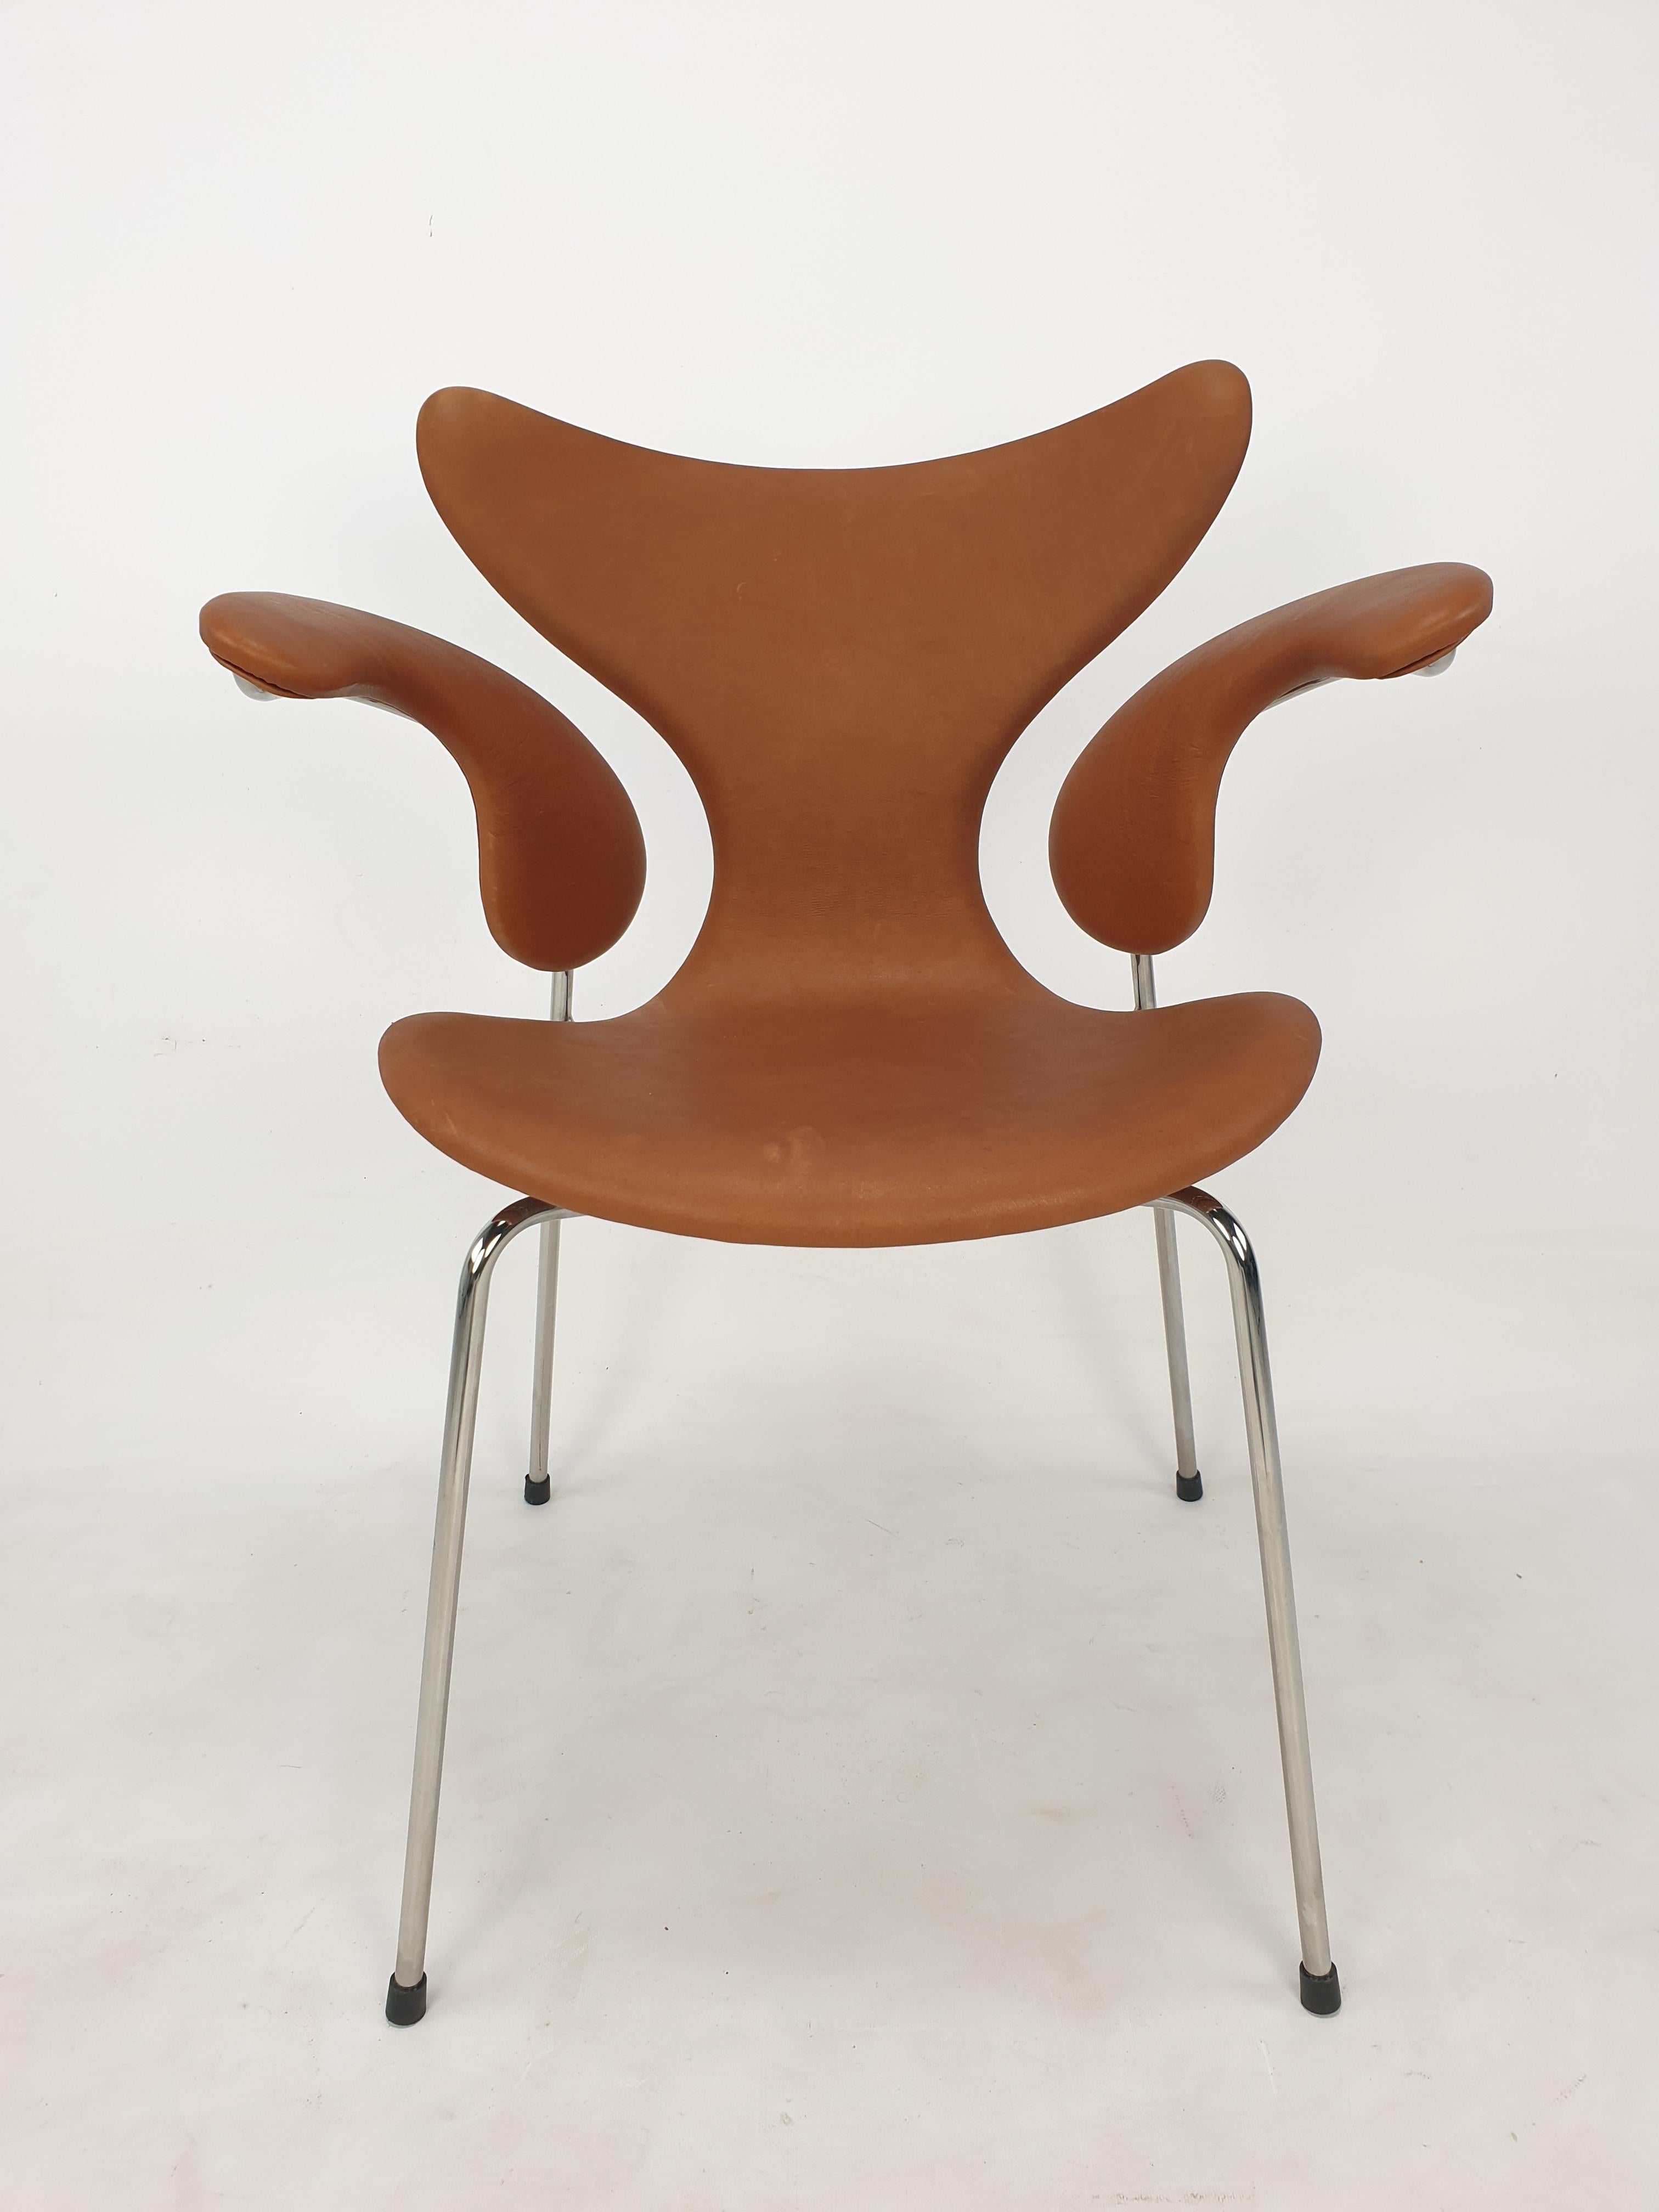 Seltener originaler Arne Jacobsen Sessel mit dem Namen 